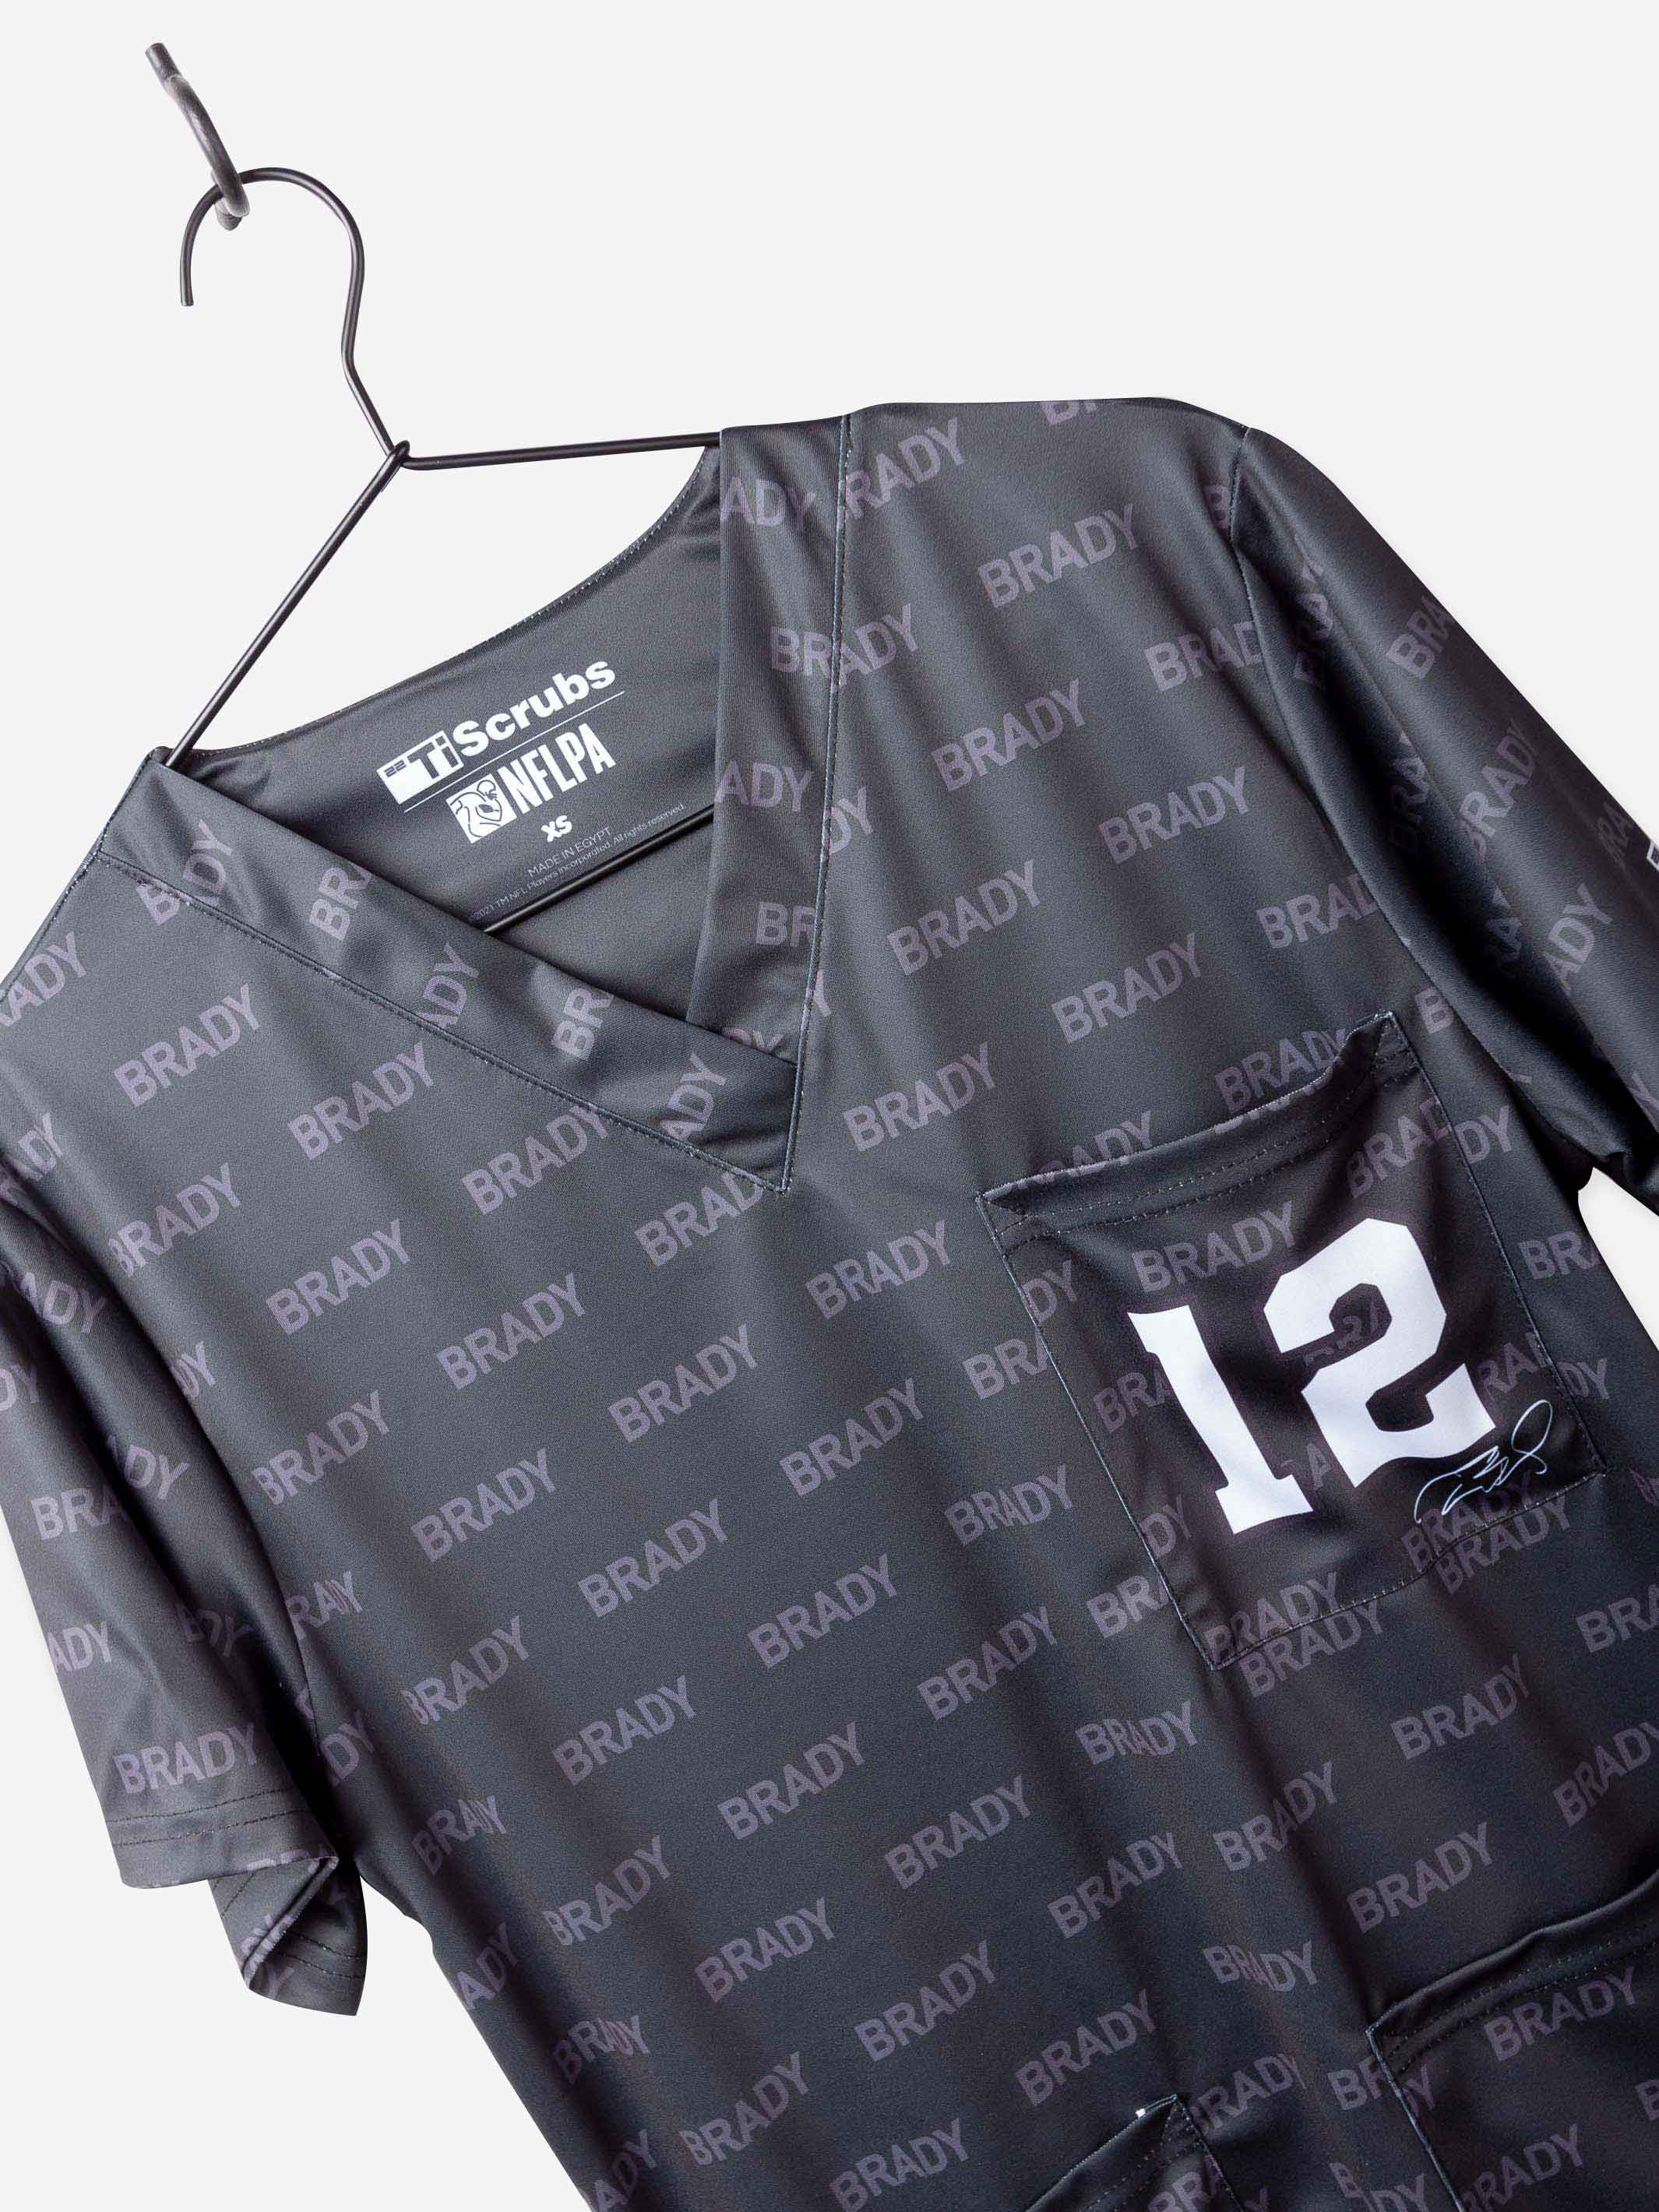 Men's NFL PA Tom Brady Jersey Scrub Top with 3 Pockets in black